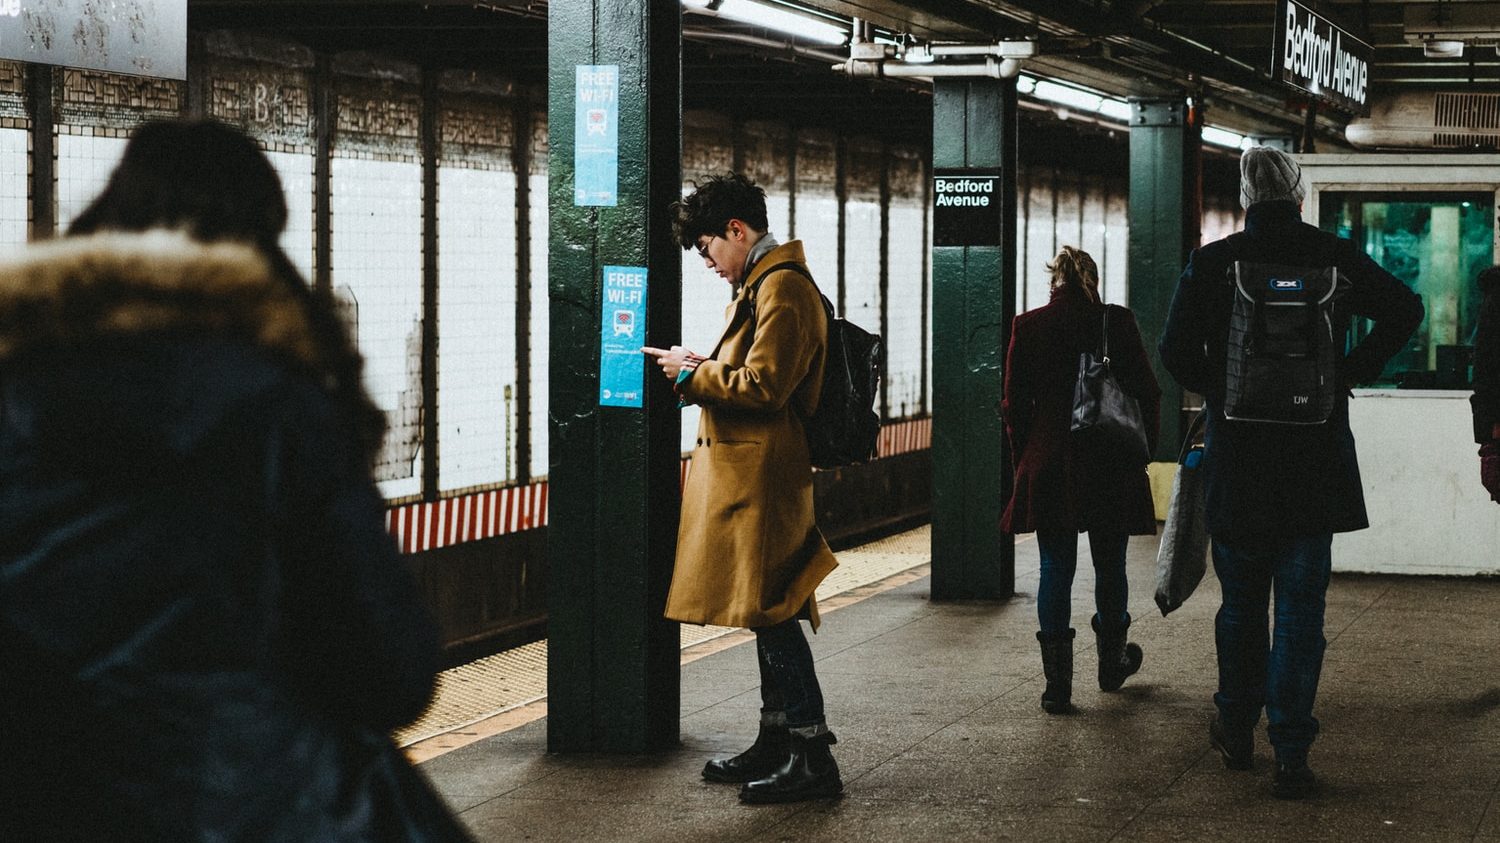 man using smartphone inside the train station